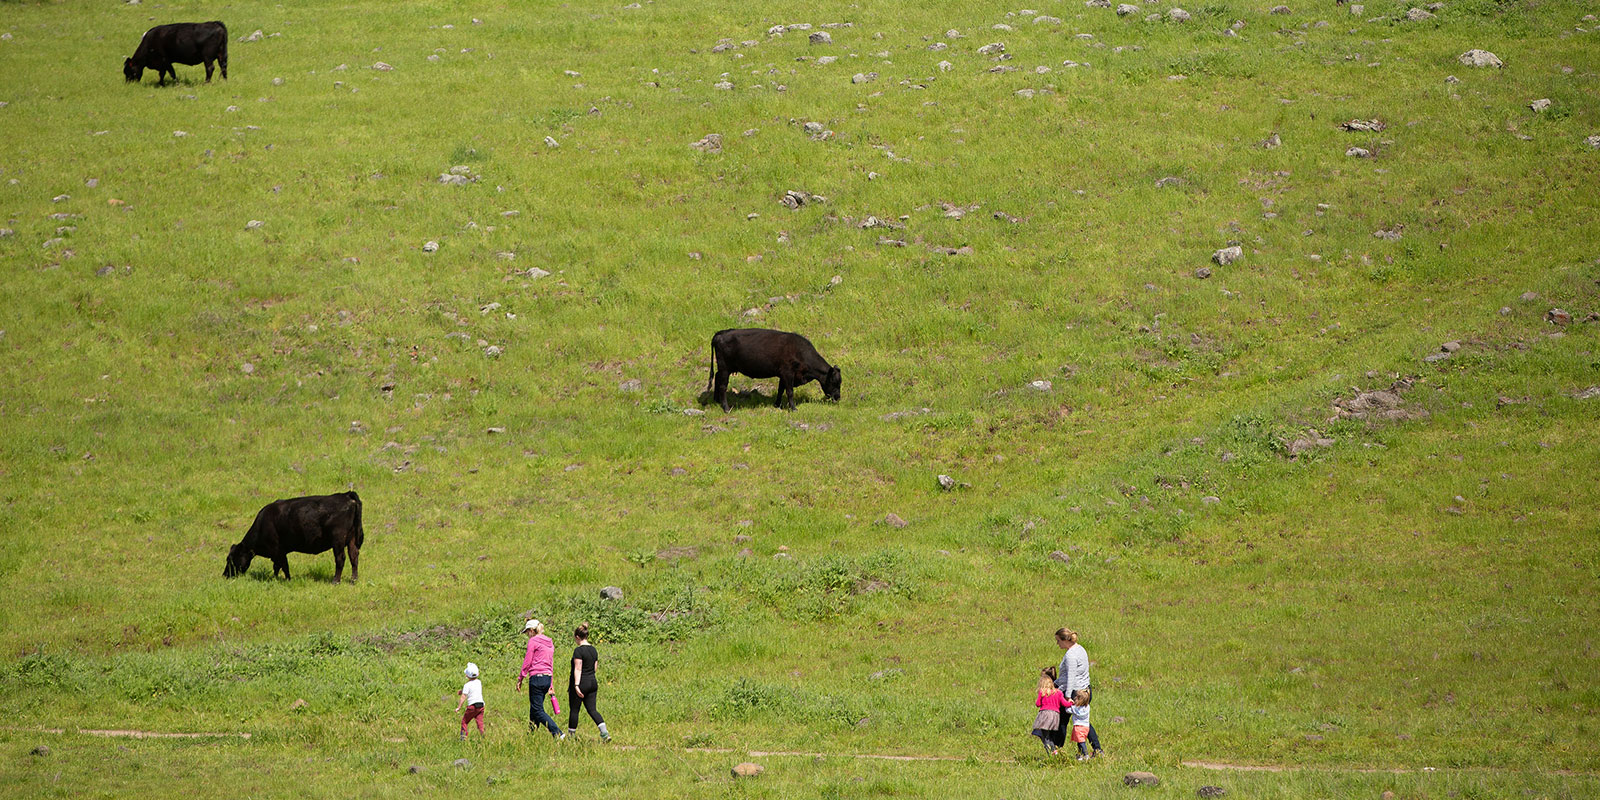 Cows grazing alongside hikers at Crane Creek Regional Park